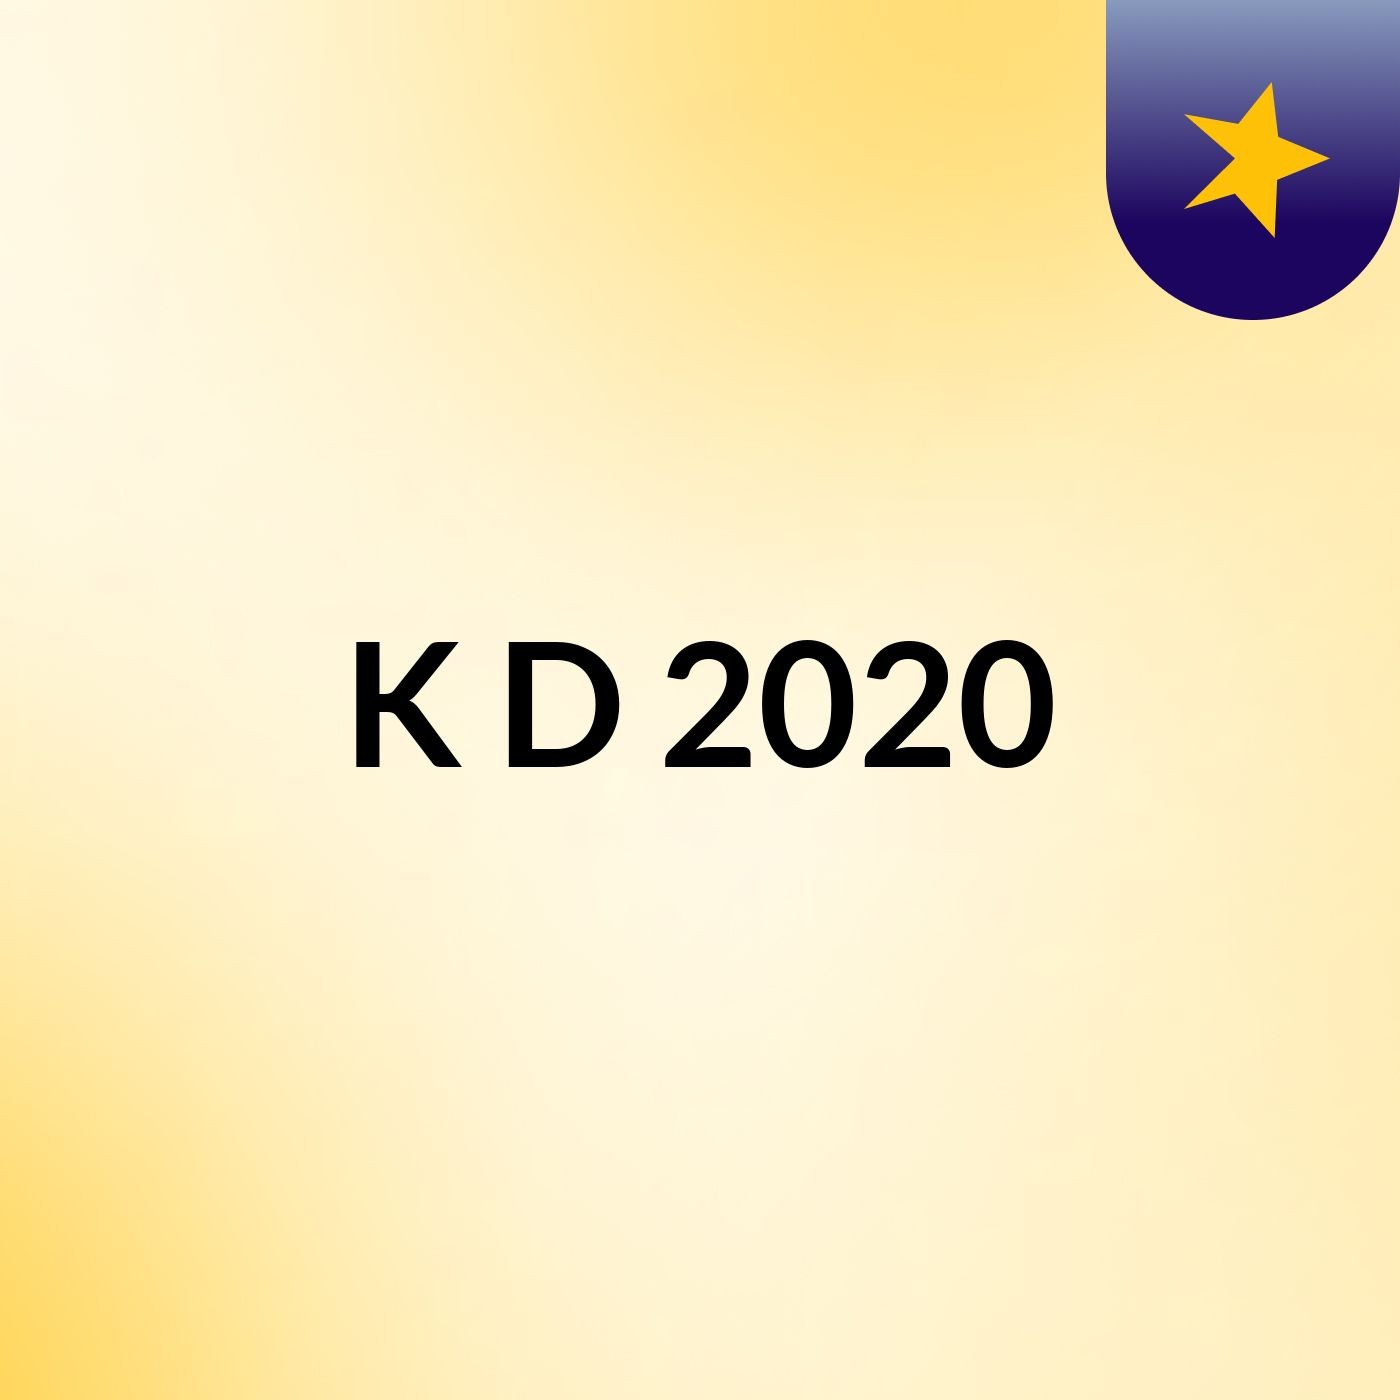 Episode 3 - K&D 2020